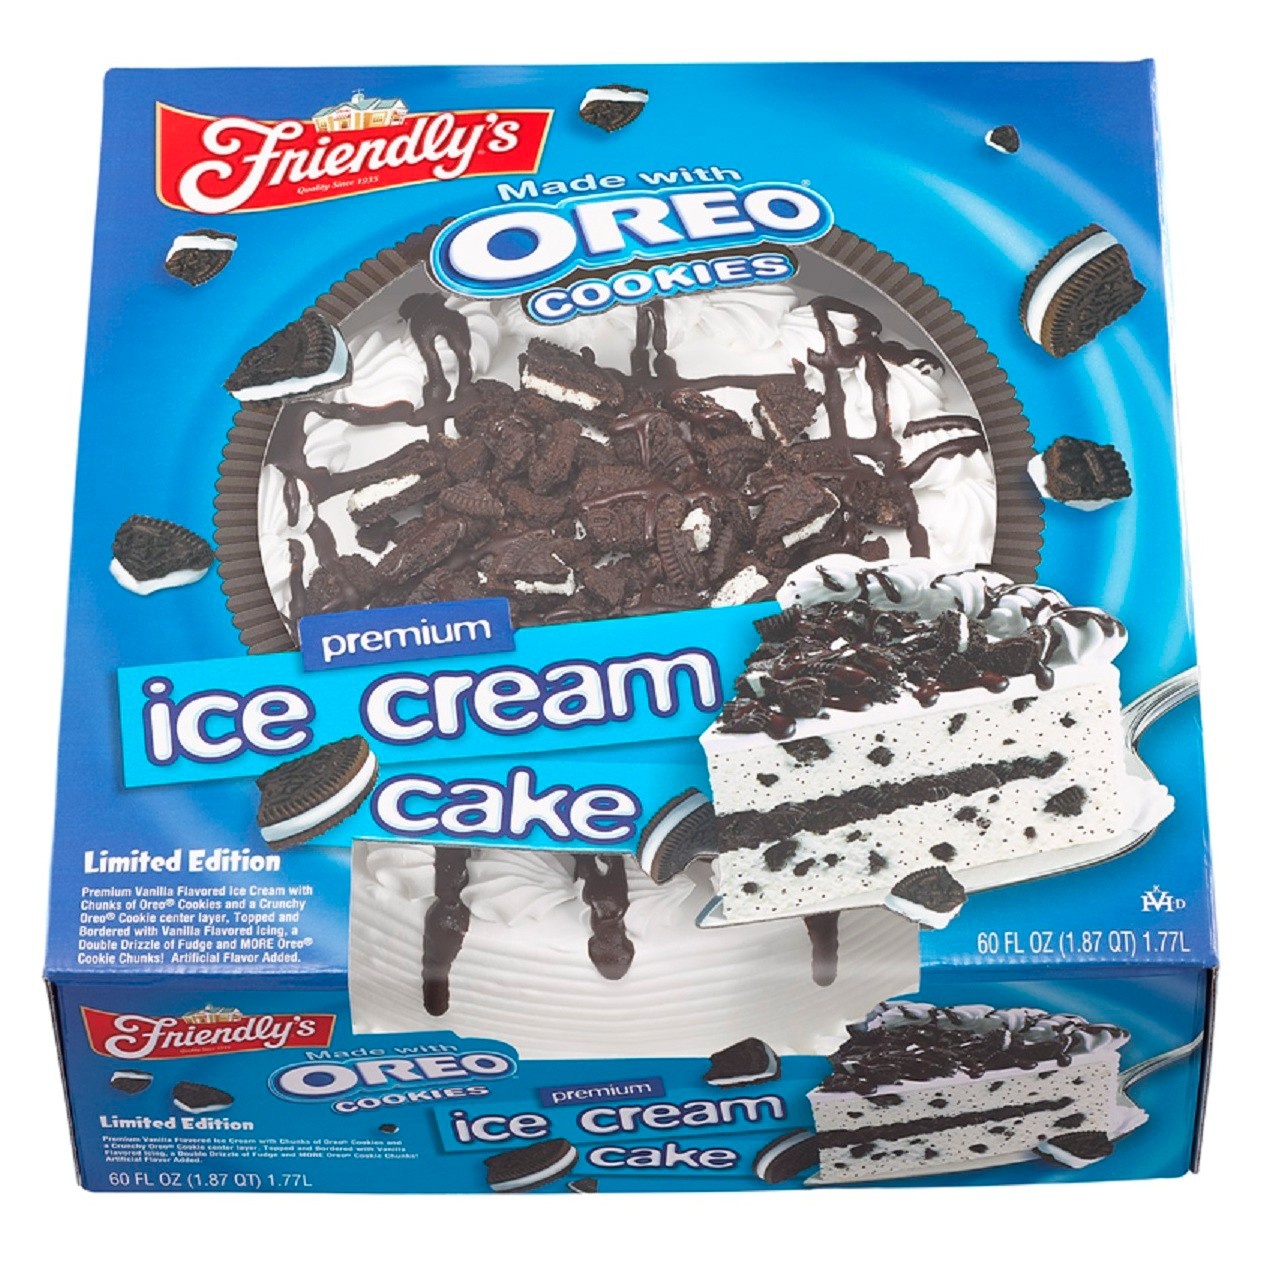 slide 1 of 3, Friendly's Oreo Cookies Premium Ice Cream Cake, 60 fl oz